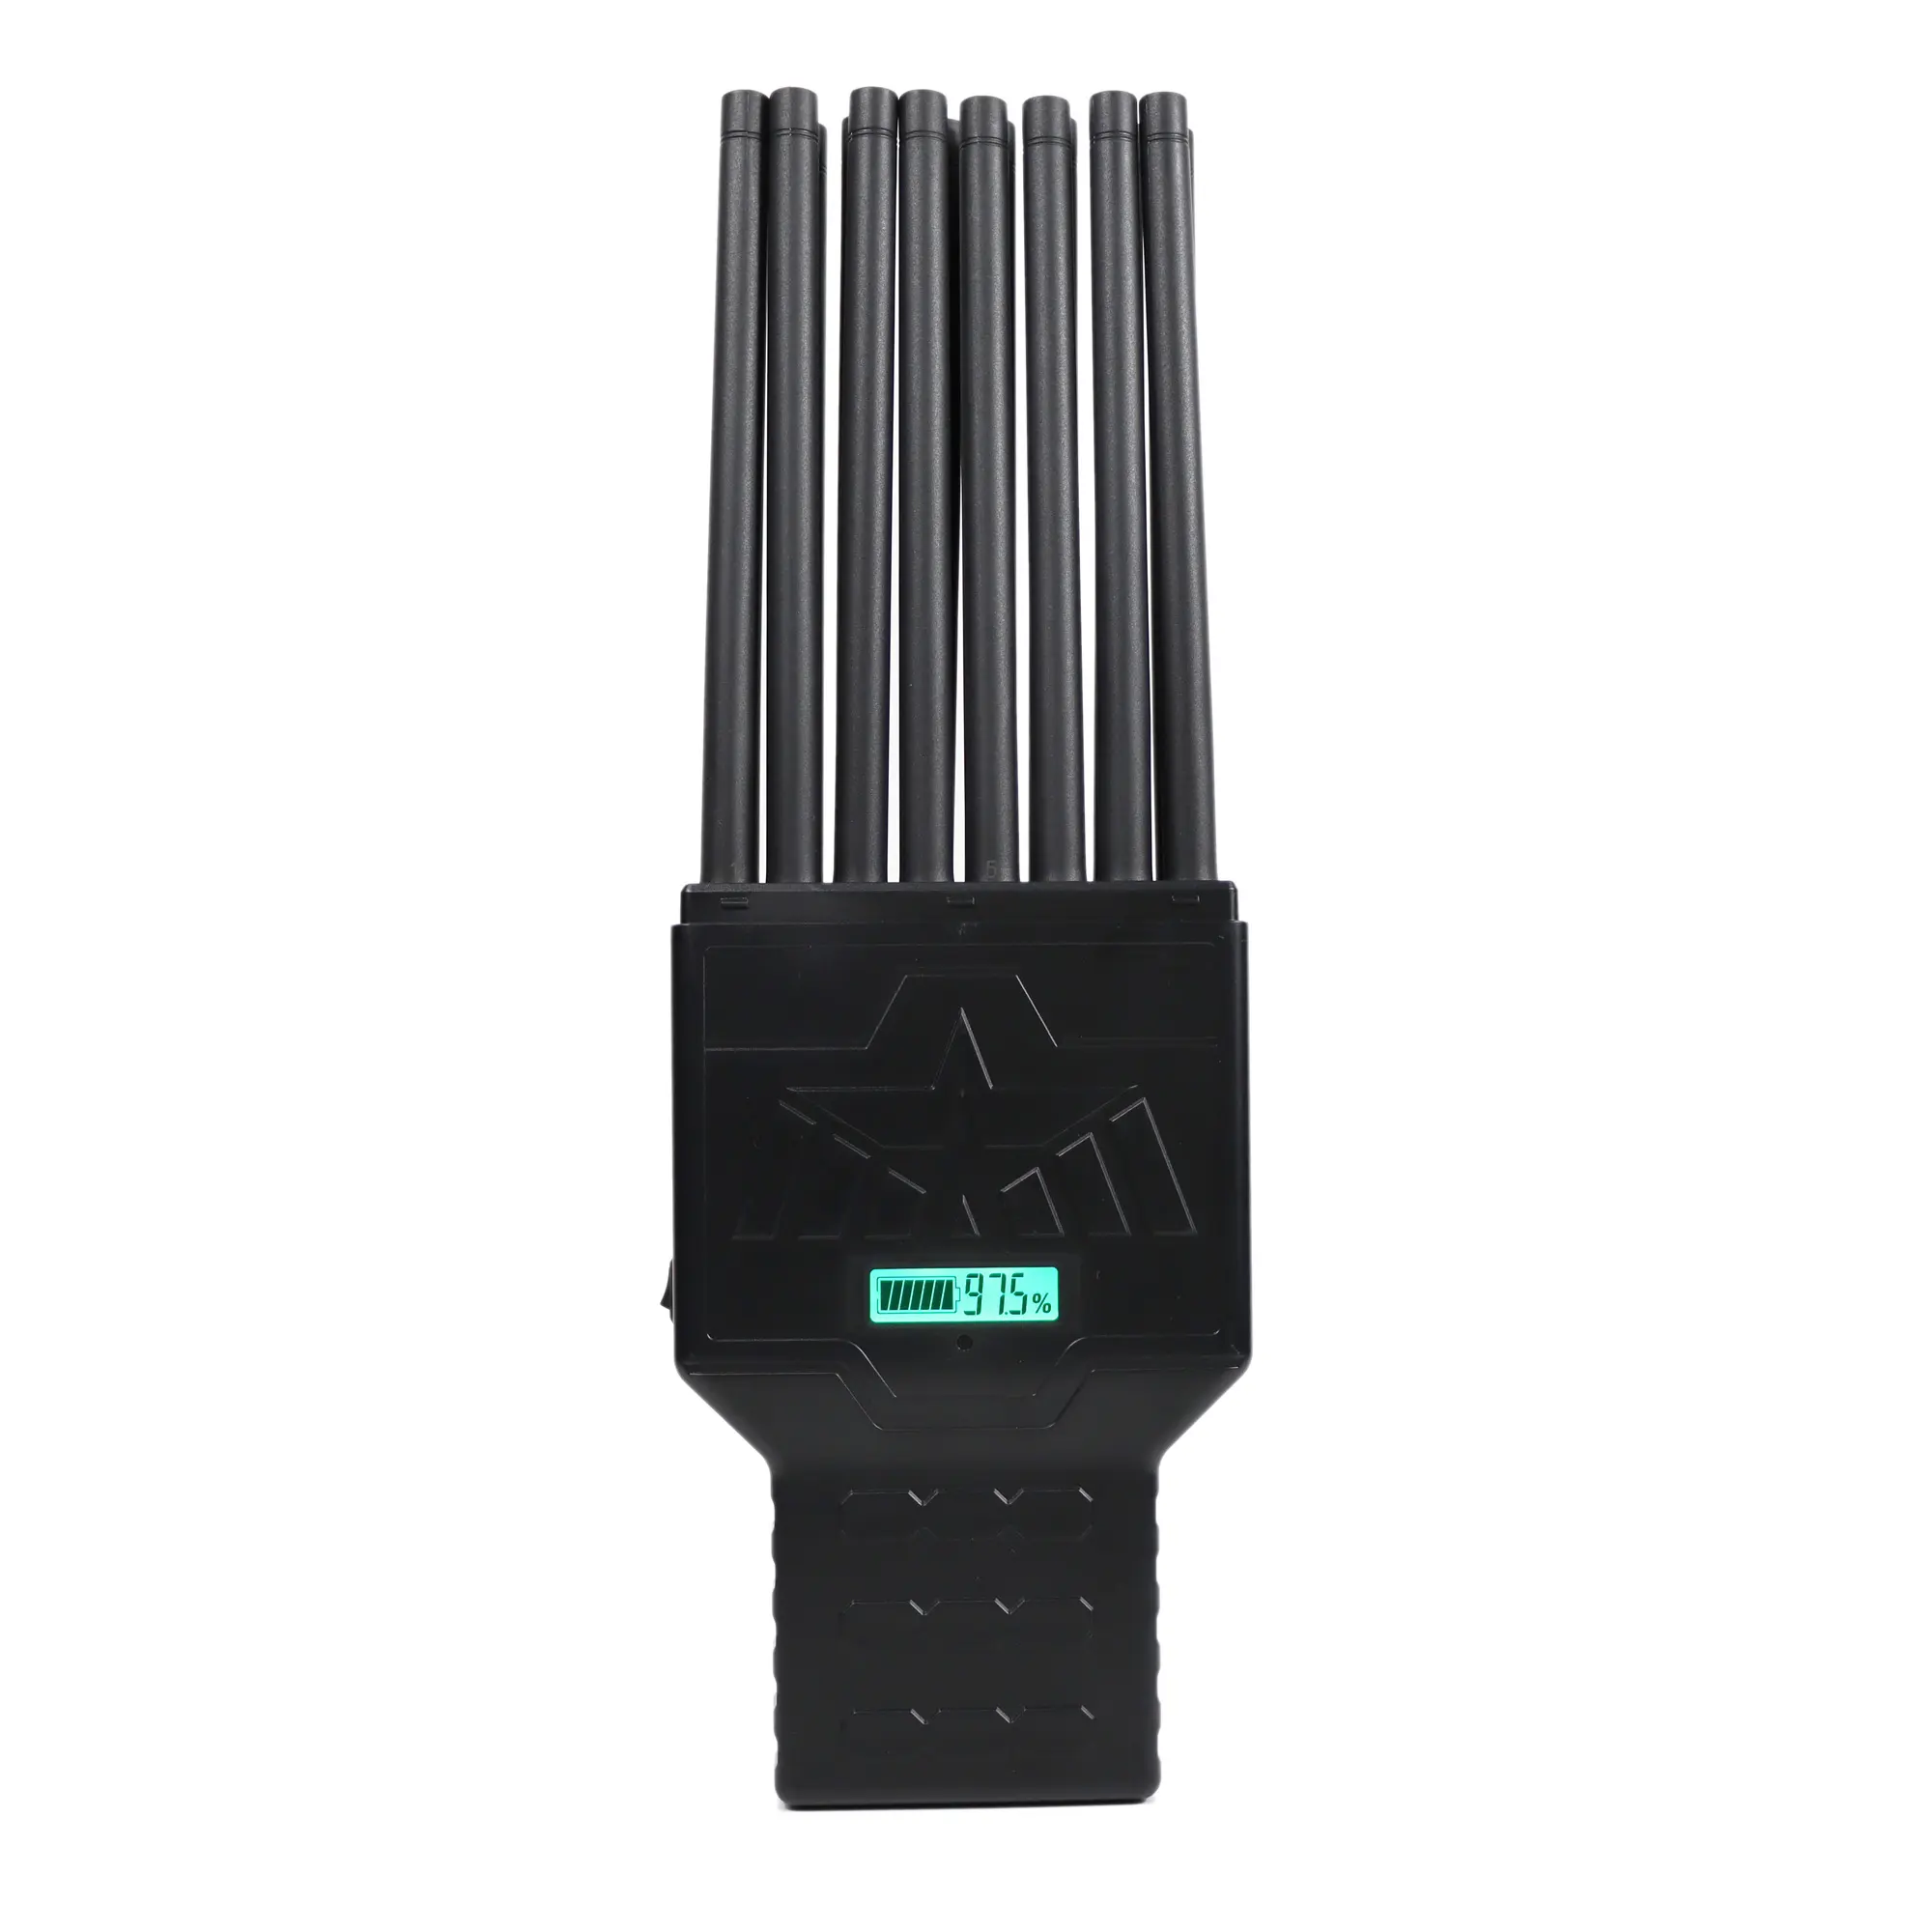 18 antenne palmare rilevatore di segnali GSM CDMA DCS 2G 3G 4G 5G VHF UHF GPS Lojack WiFi fino a 5-20 M